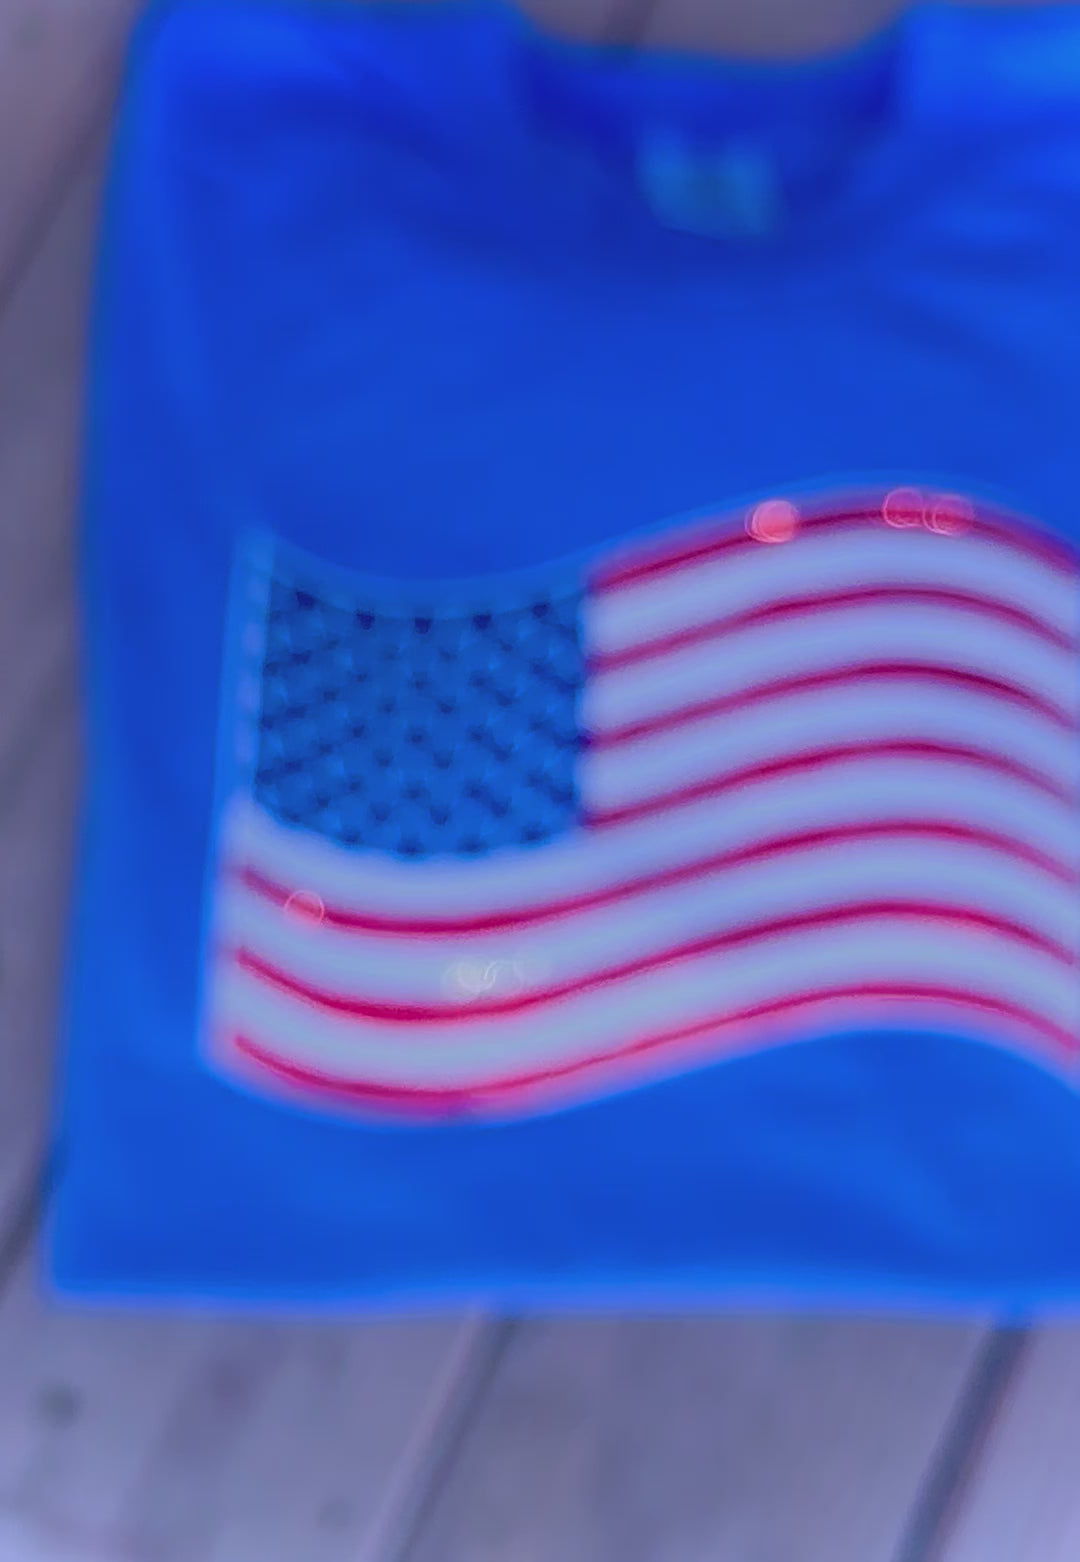 Sequin USA Flag